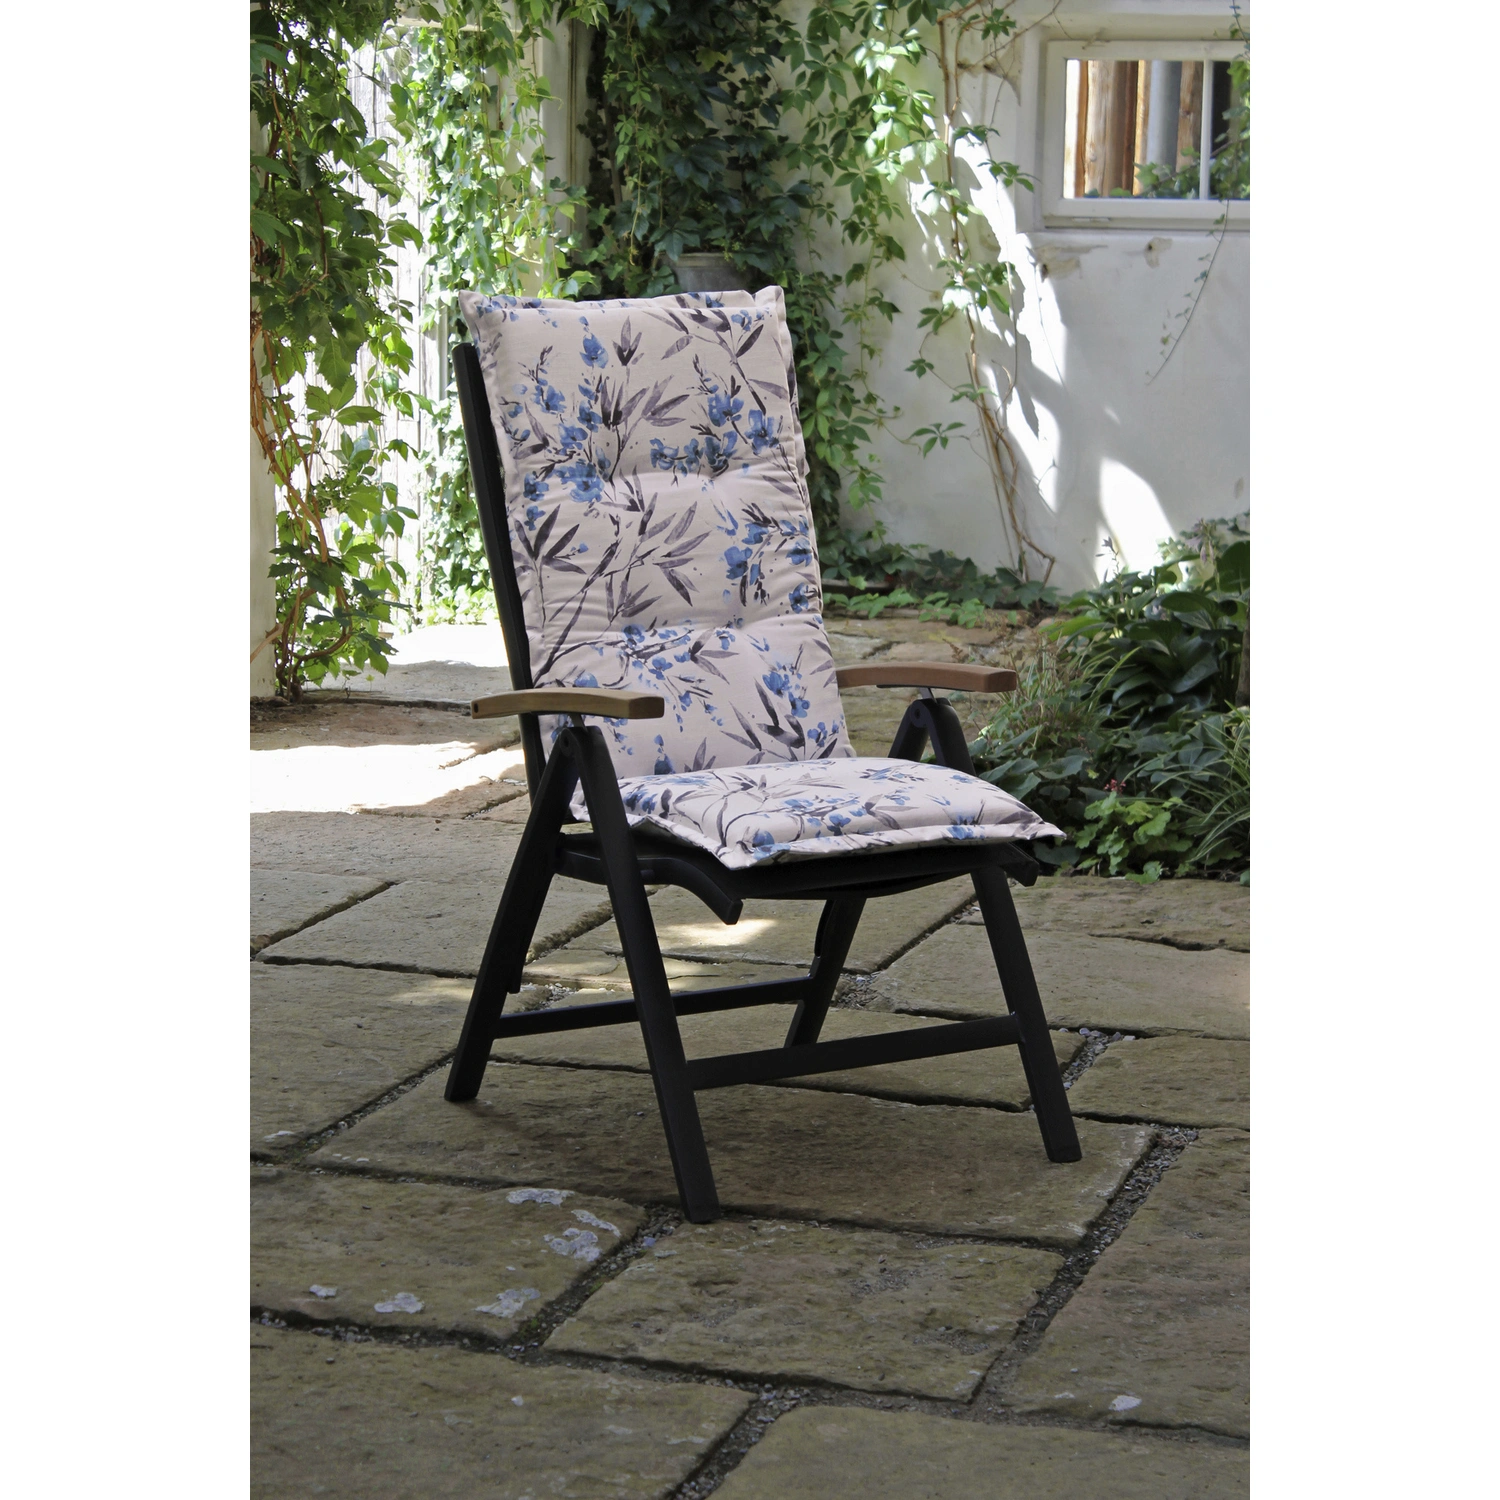 BEST Sesselauflage »Swing-Line«, weiß/blau/lila/grau, BxL: 50 x 120 cm